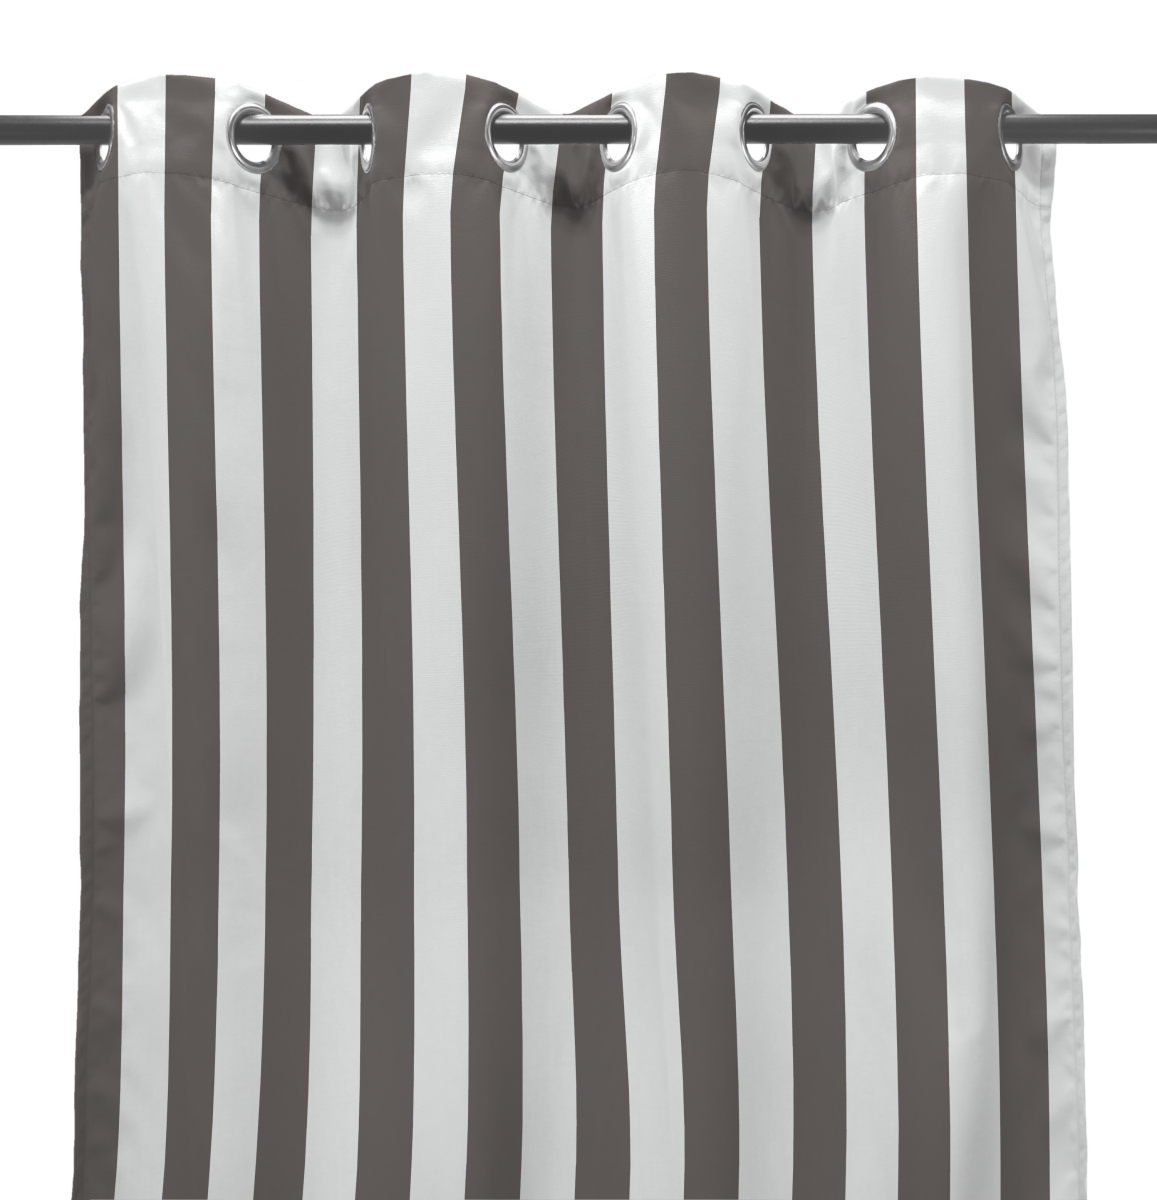 3voc5484-4336q 54 X 84 In. Outdoor Curtain Panel In Gray Stripe